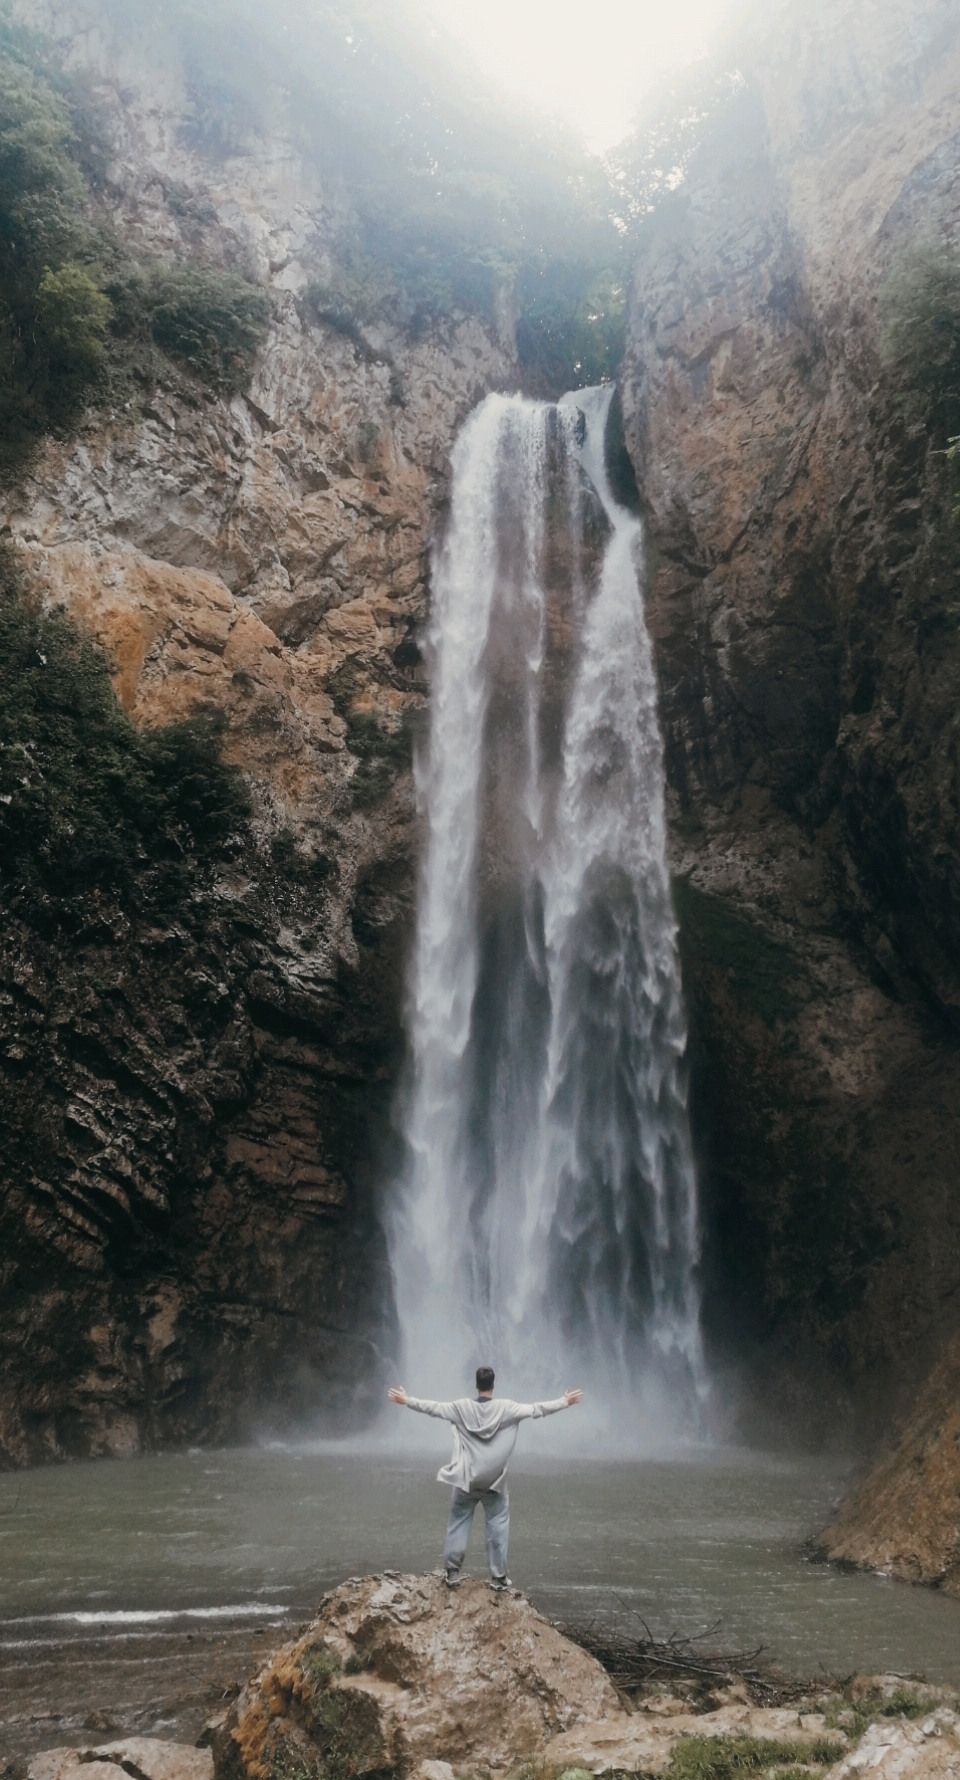 Waterfall Bliha - geomorphological monument of nature